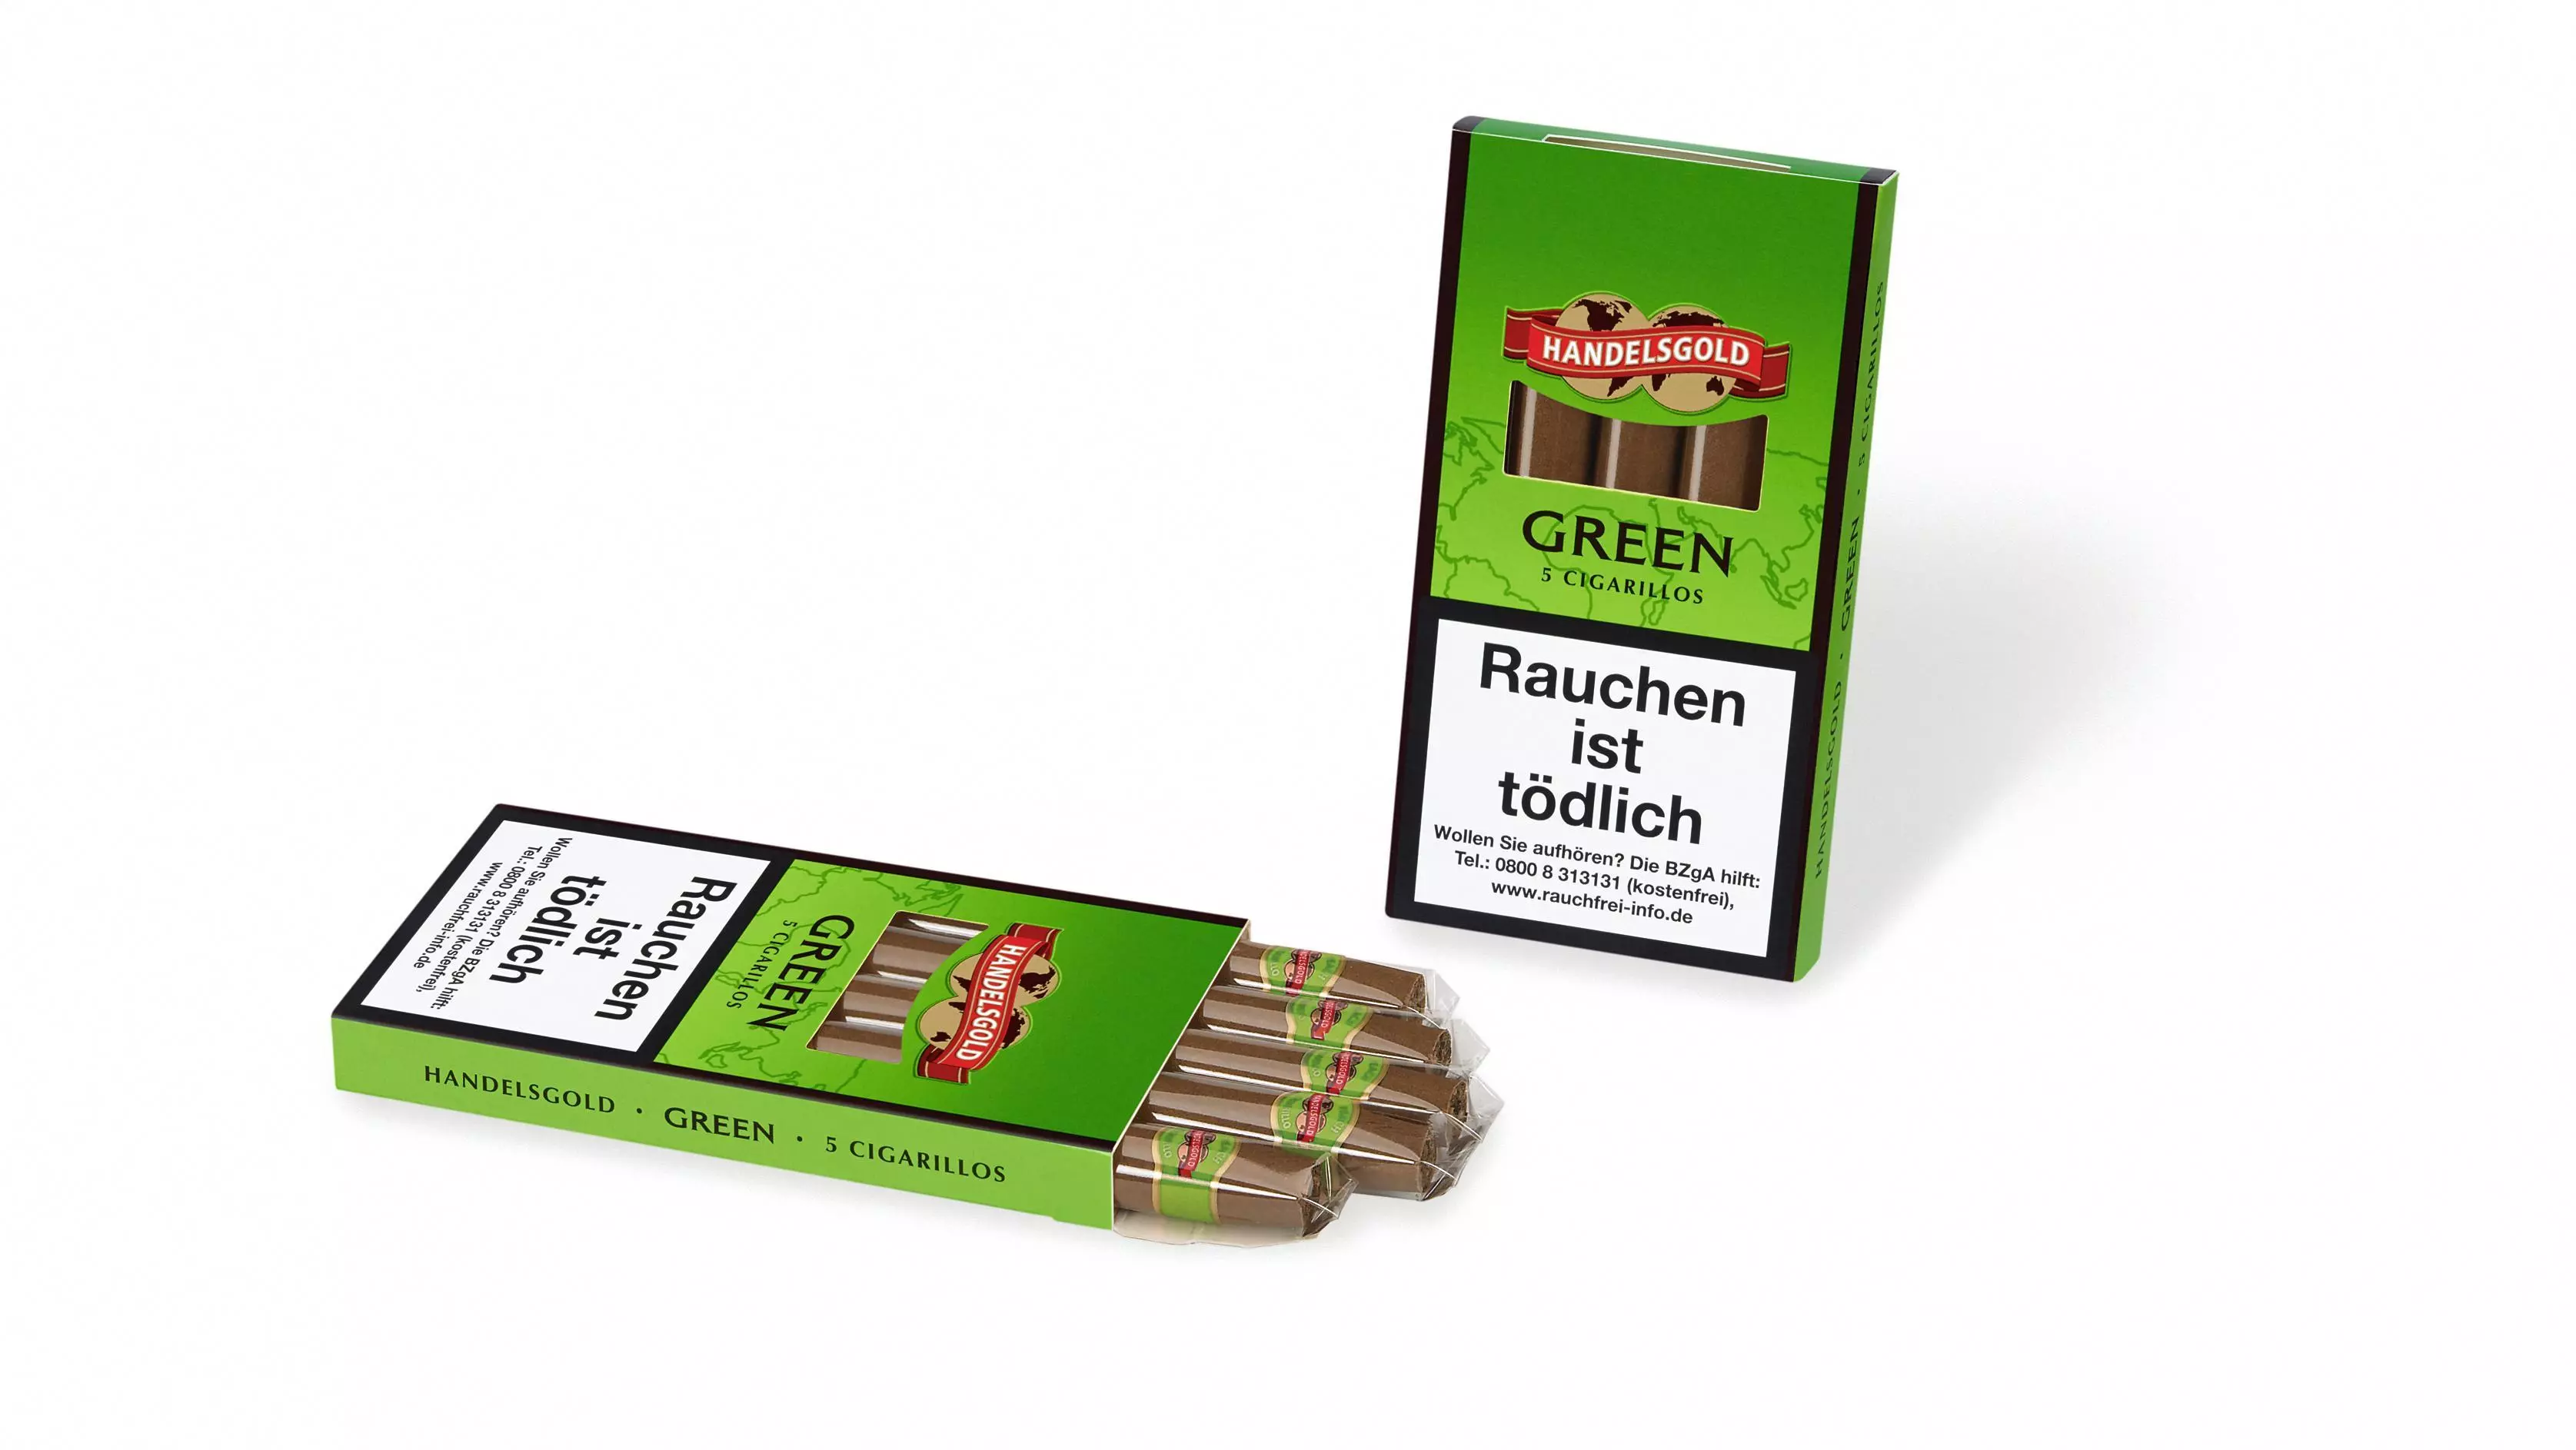 Handelsgold Sweet Green Nr. 205 10 x 5 Zigarillos